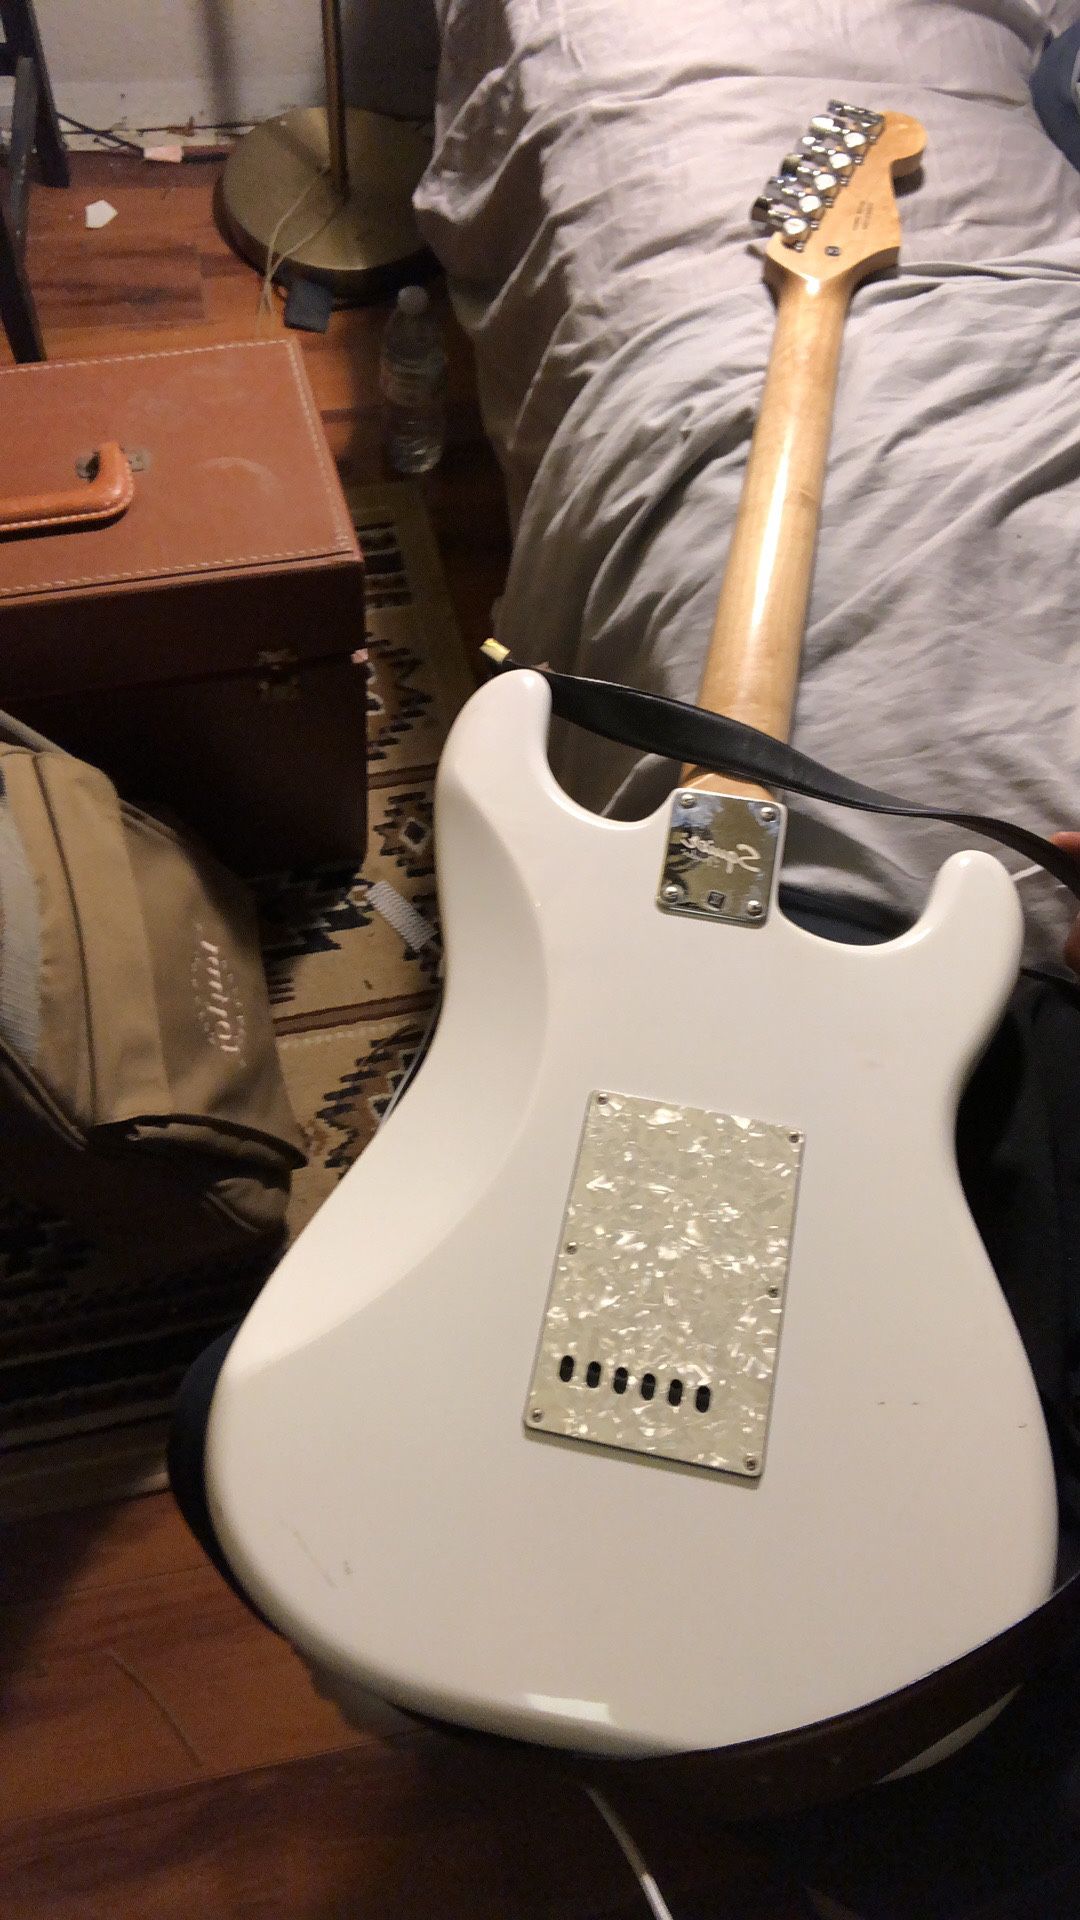 Guitar 60 bucks